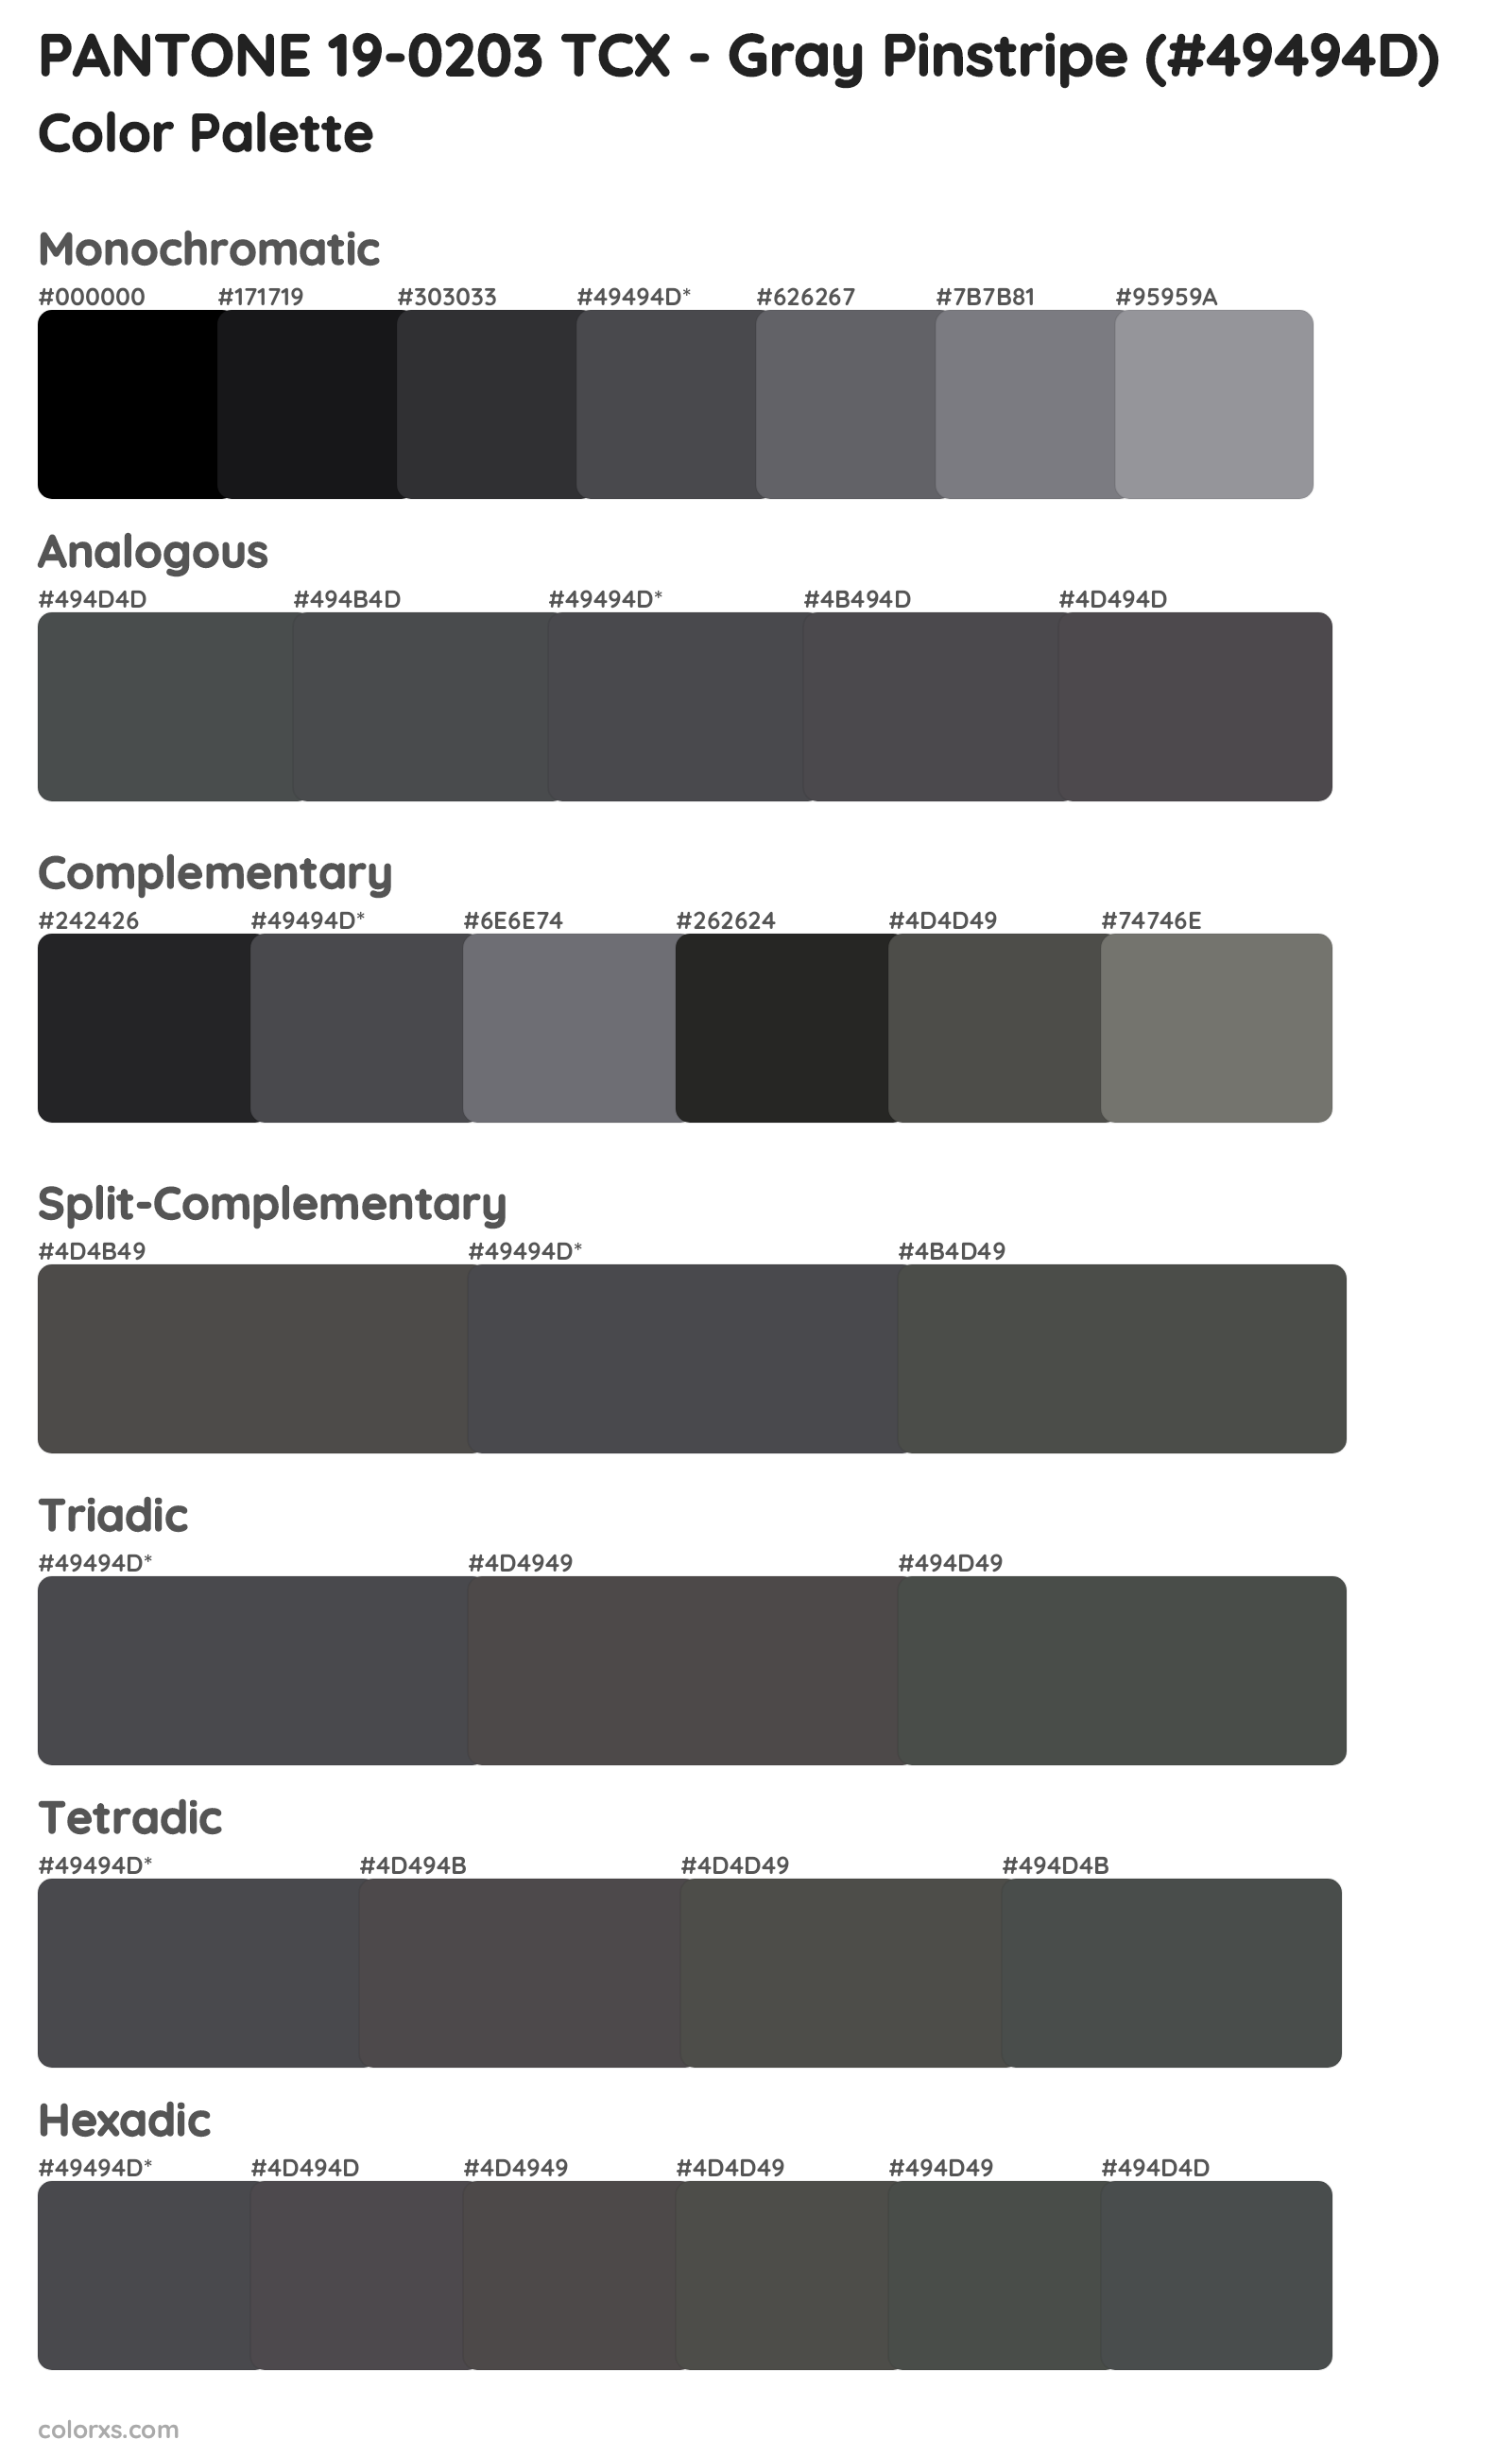 PANTONE 19-0203 TCX - Gray Pinstripe Color Scheme Palettes